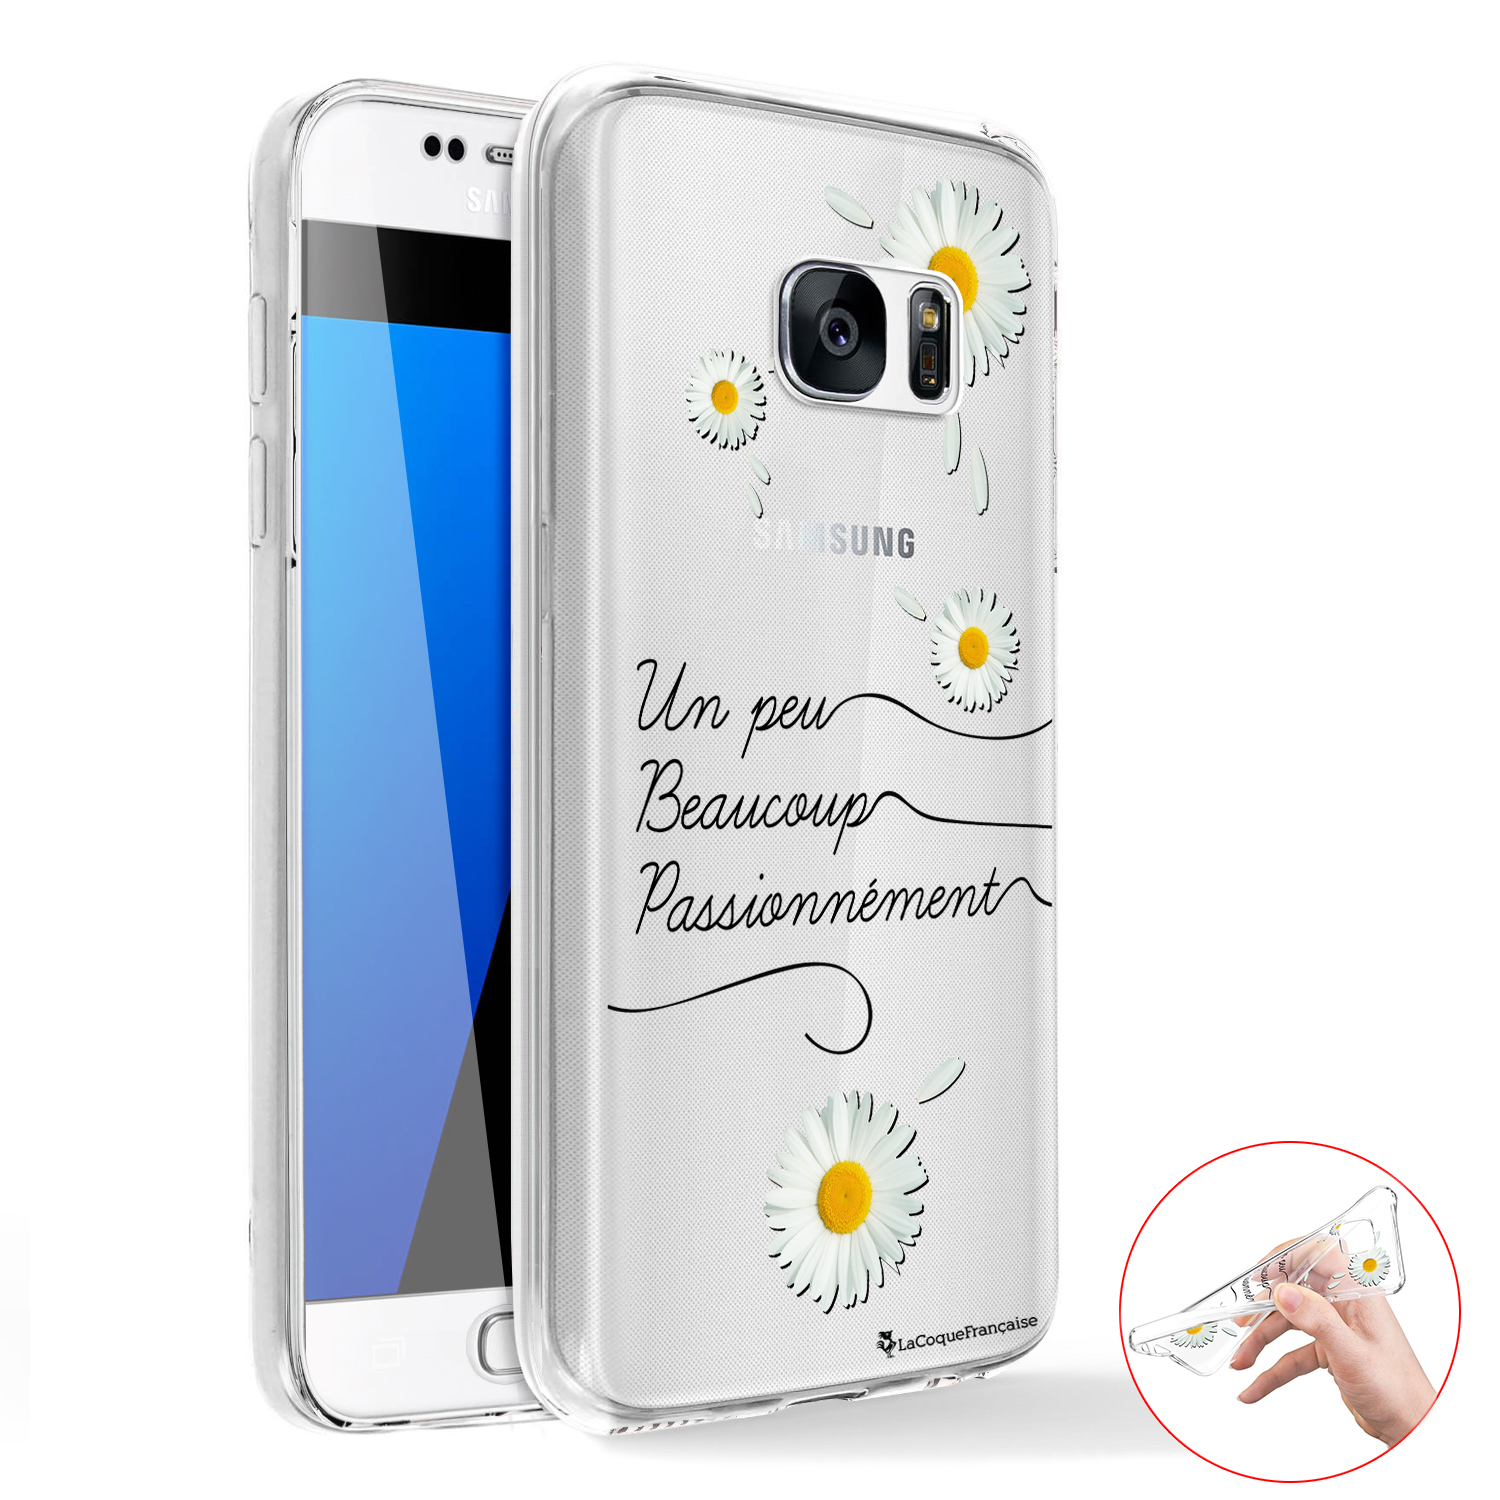 Coque silicone transparente galaxy s6 pour Mobile Samsung